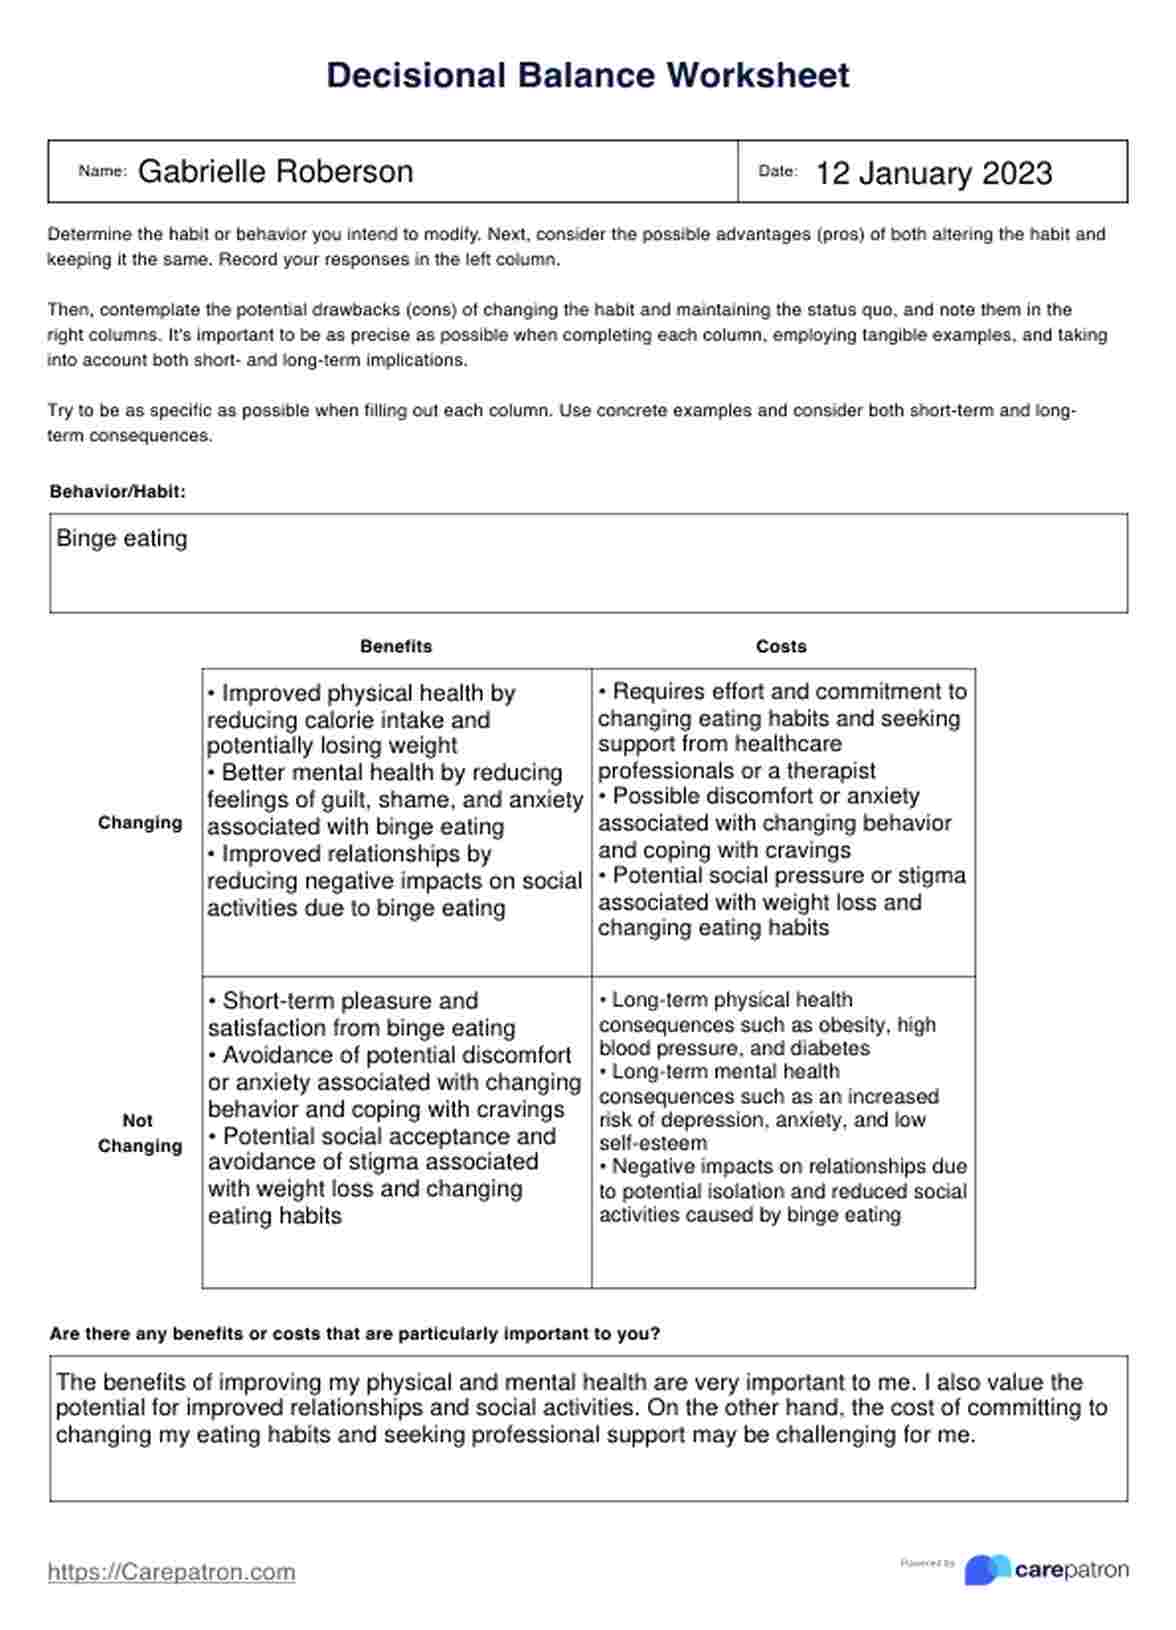 Decisional Balance Worksheet PDF Example